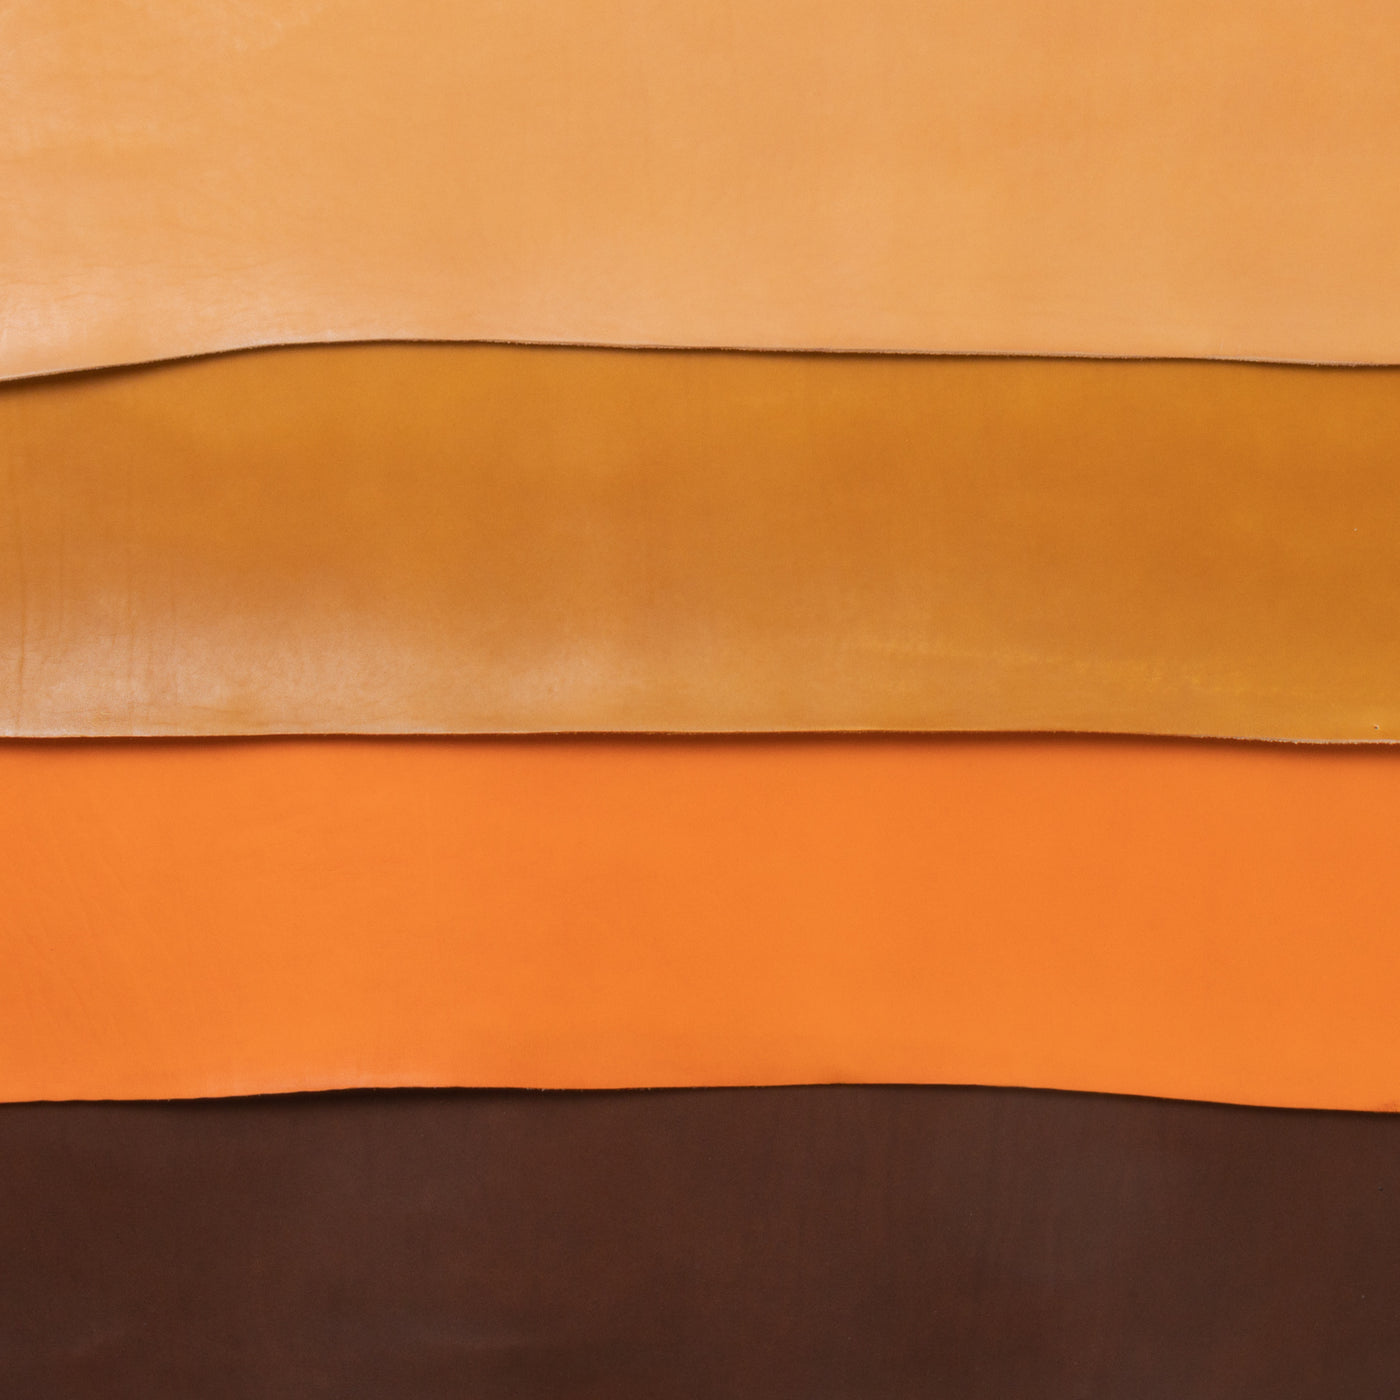 Tanned/smooth leather half-cut/orange